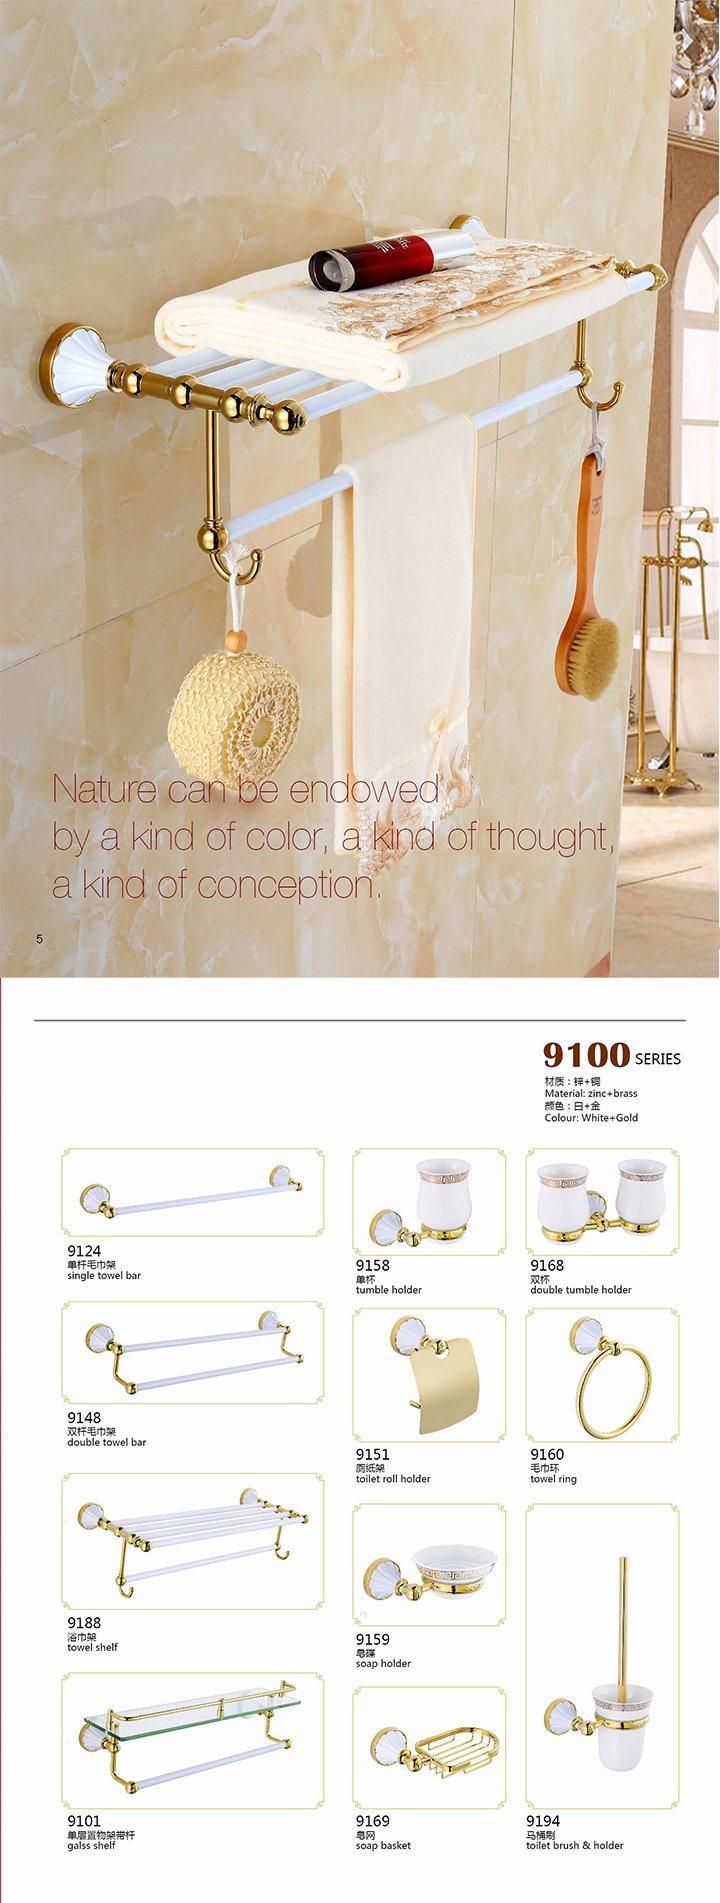 Foshan Bathroom Toilet Brush and Holder Set 9000 Series